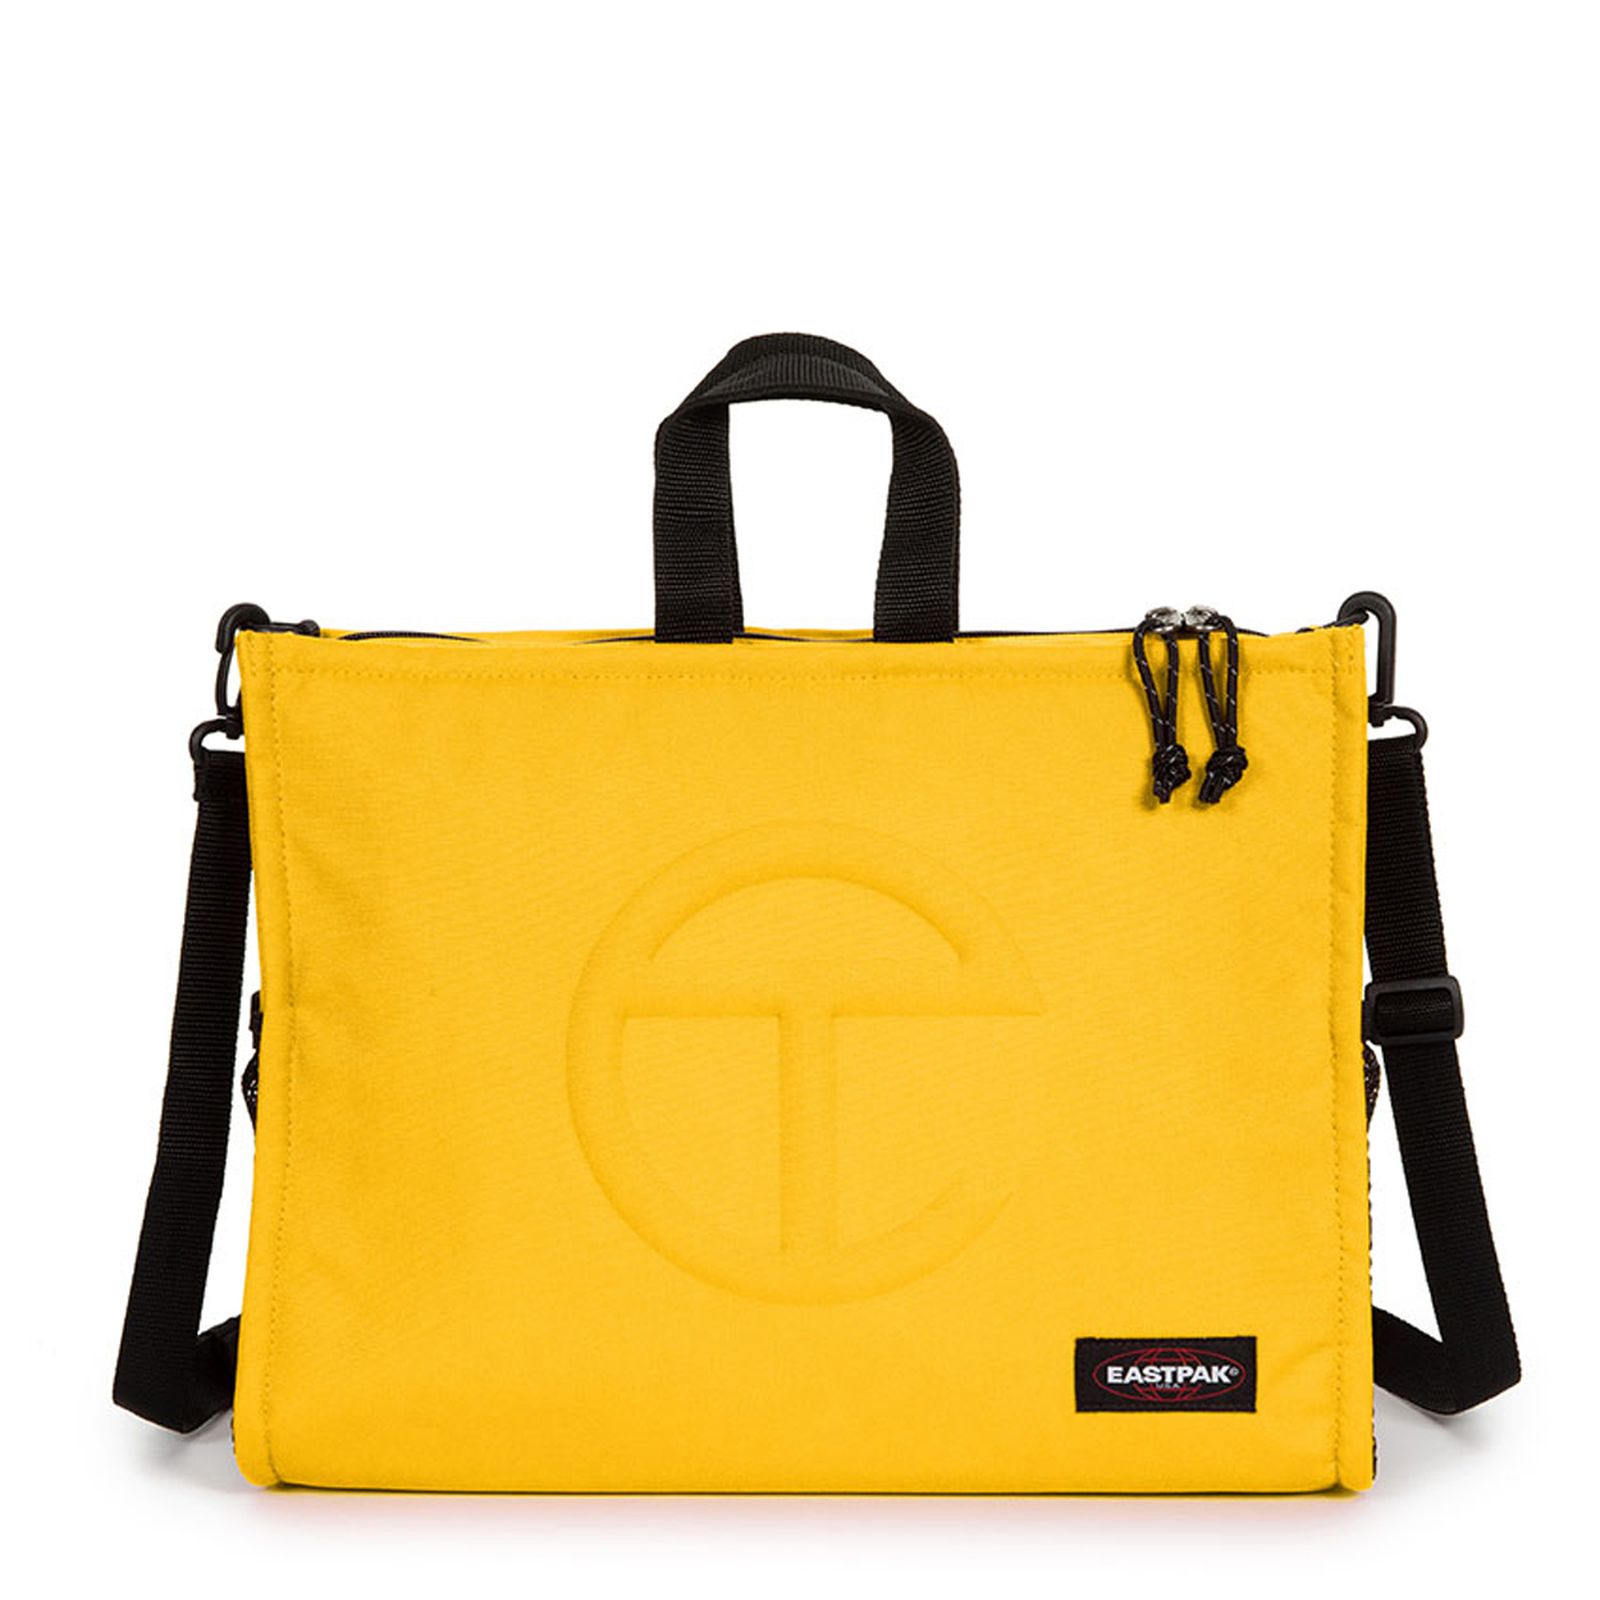 telfar-eastpak-collab-bag-yellow-restock-4